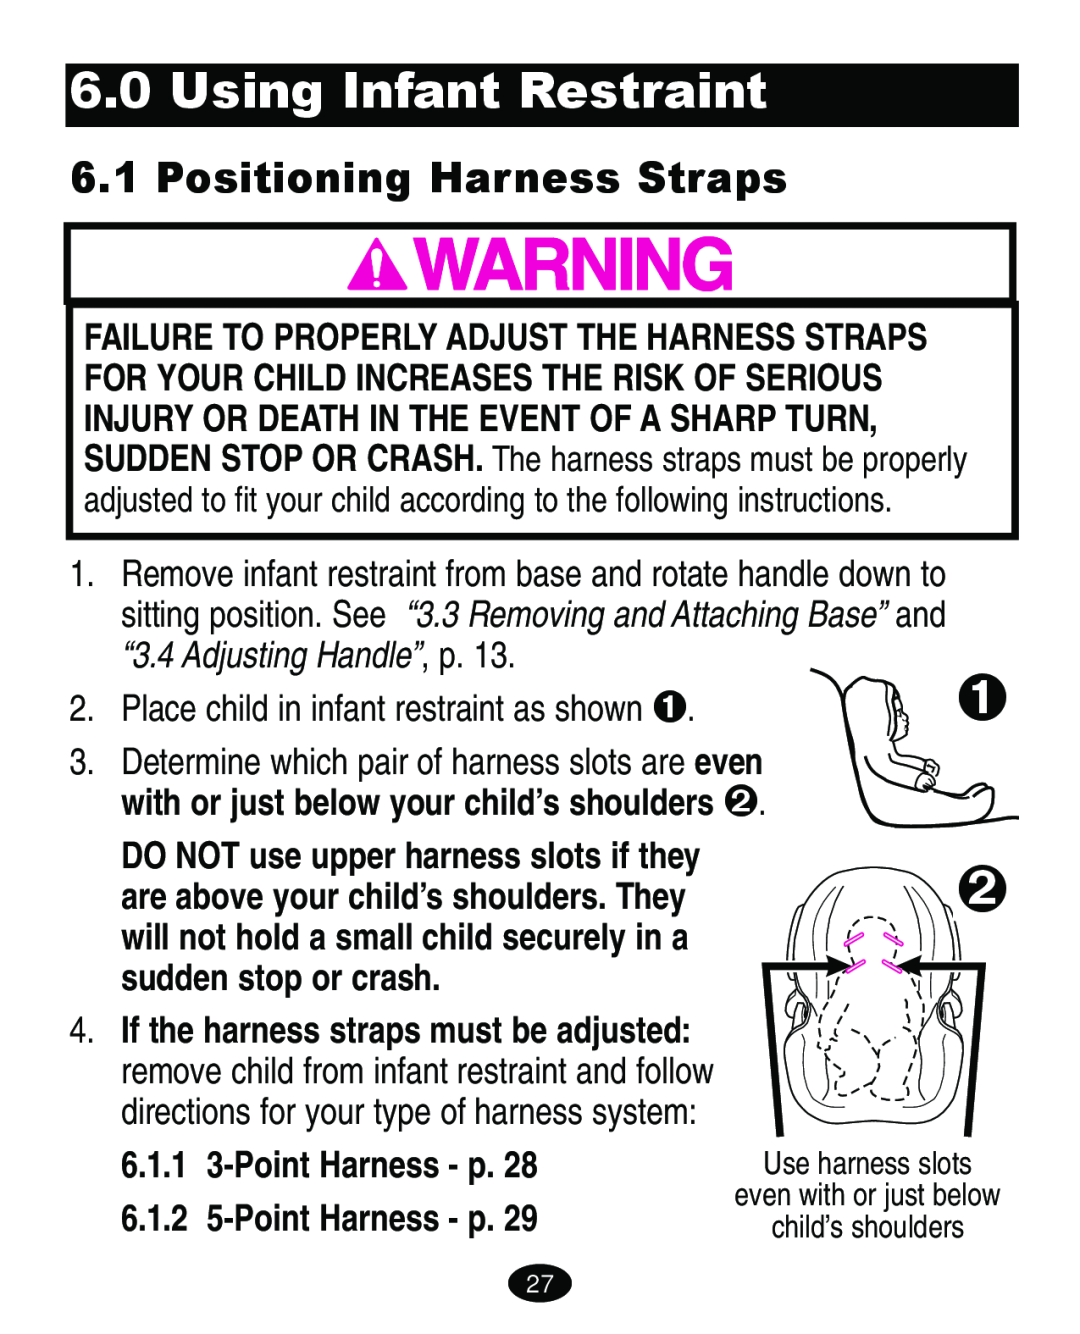 Graco ISPA108AB Using Infant Restraint, Positioning Harness Straps, 6.1.1 3-Point Harness - p 6.1.2 5-Point Harness - p 